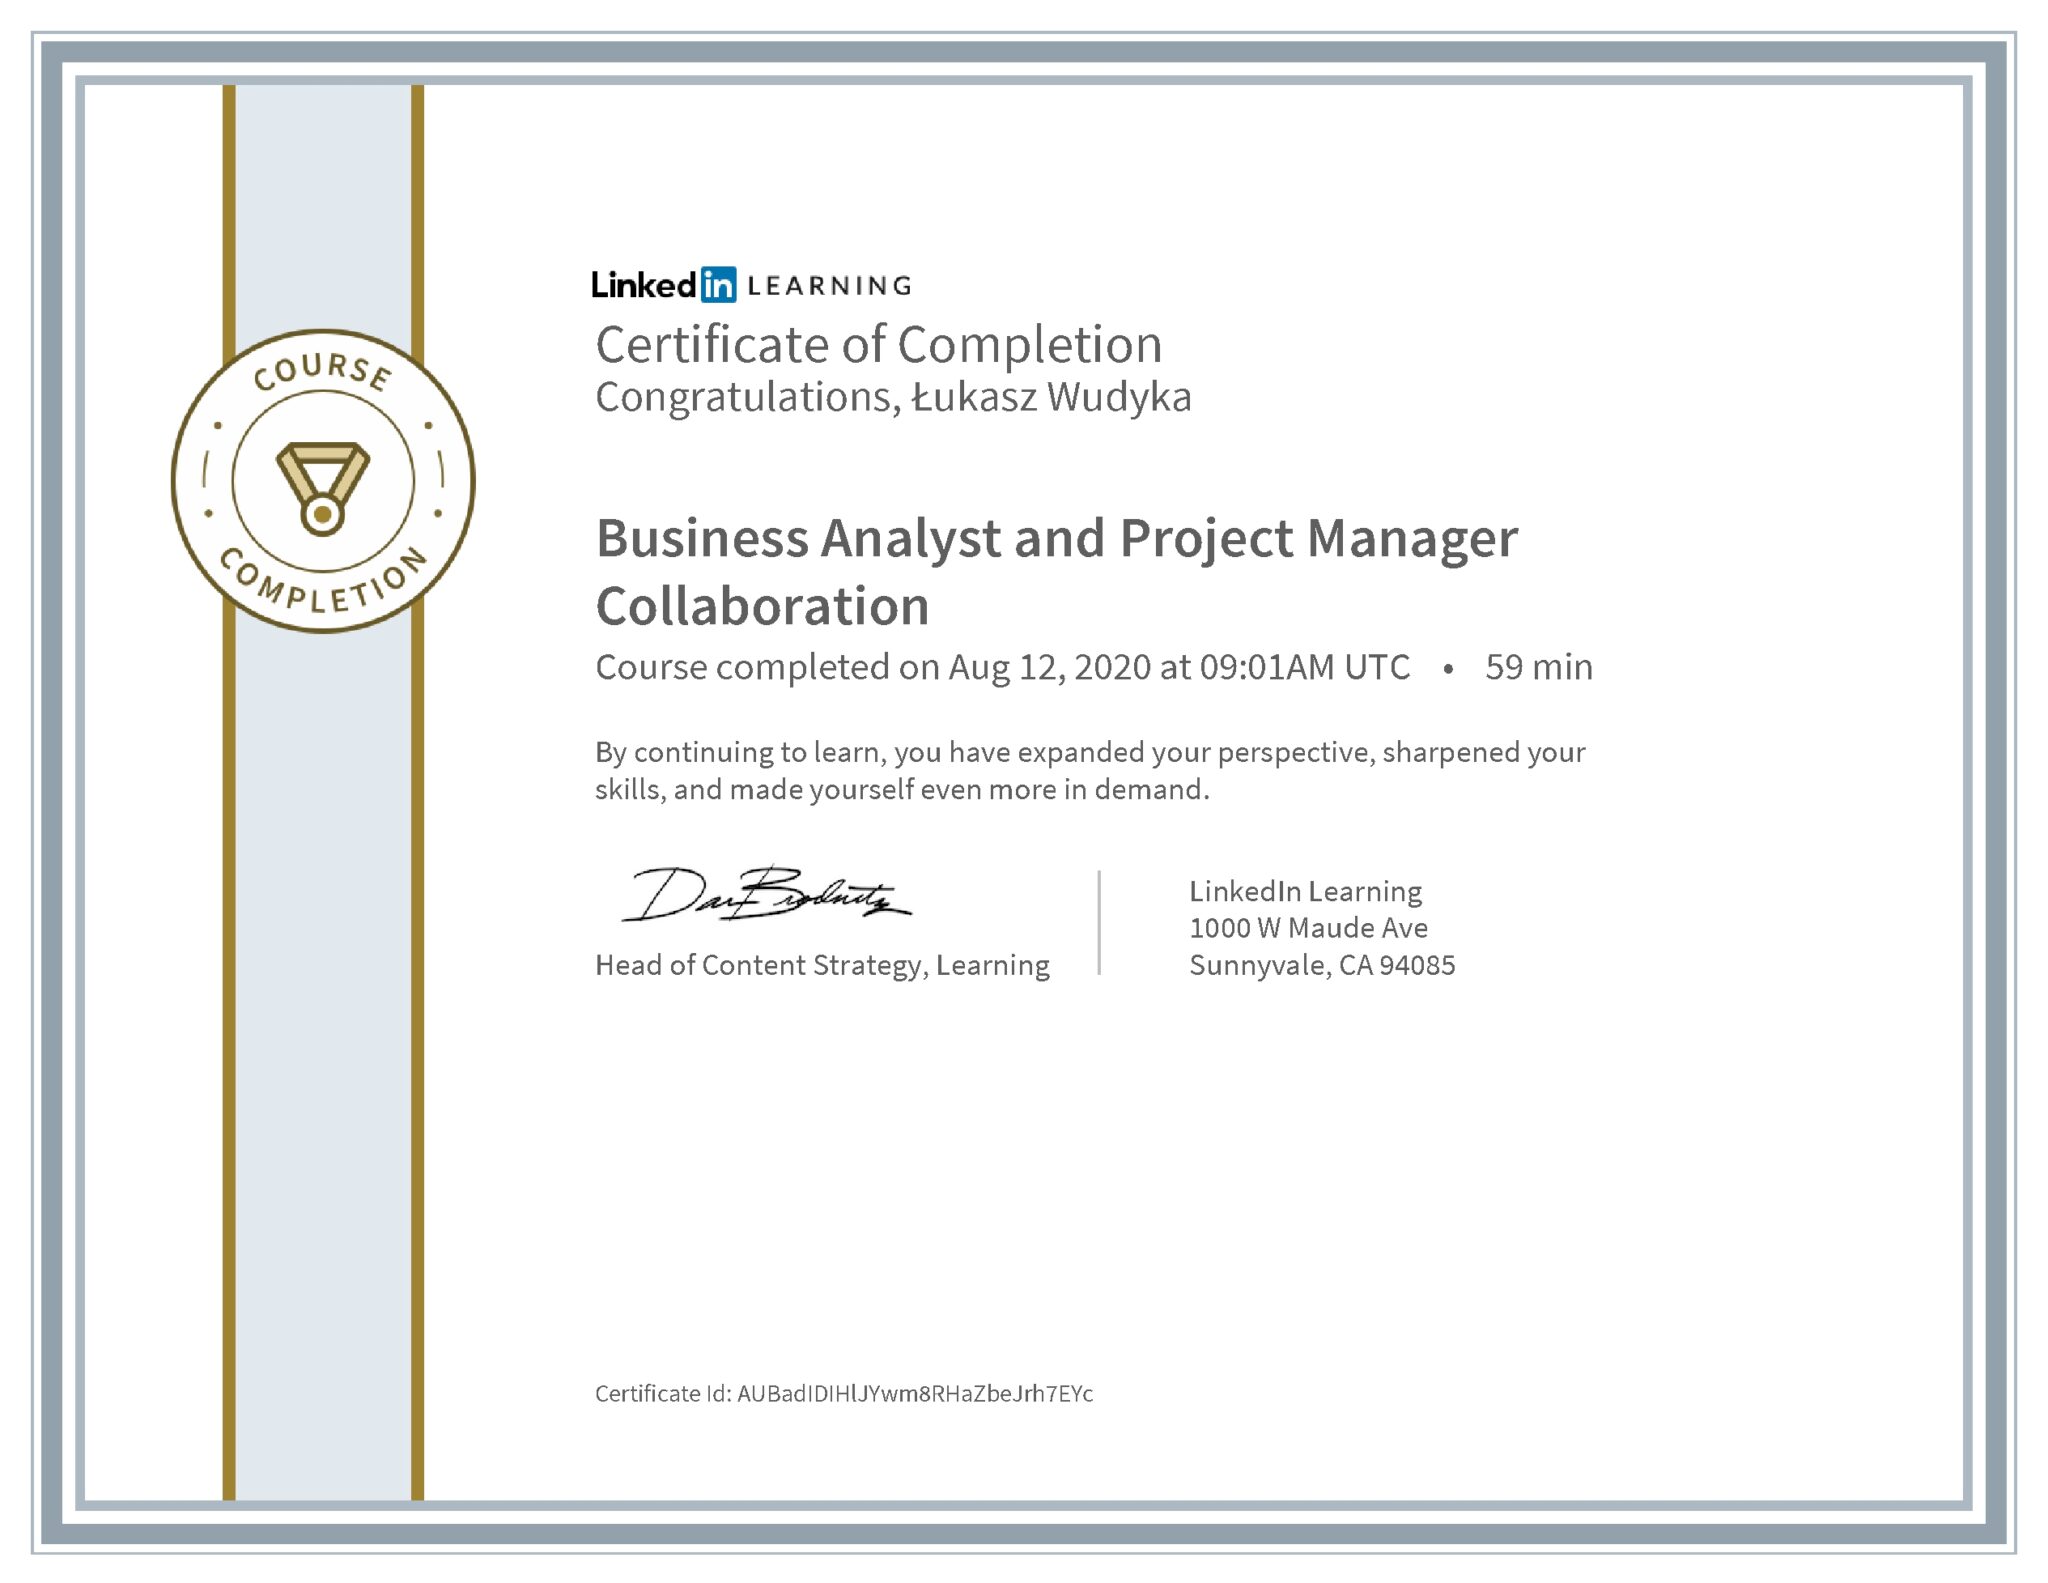 Łukasz Wudyka certyfikat LinkedIn Business Analysis and Project Manager Callaboration